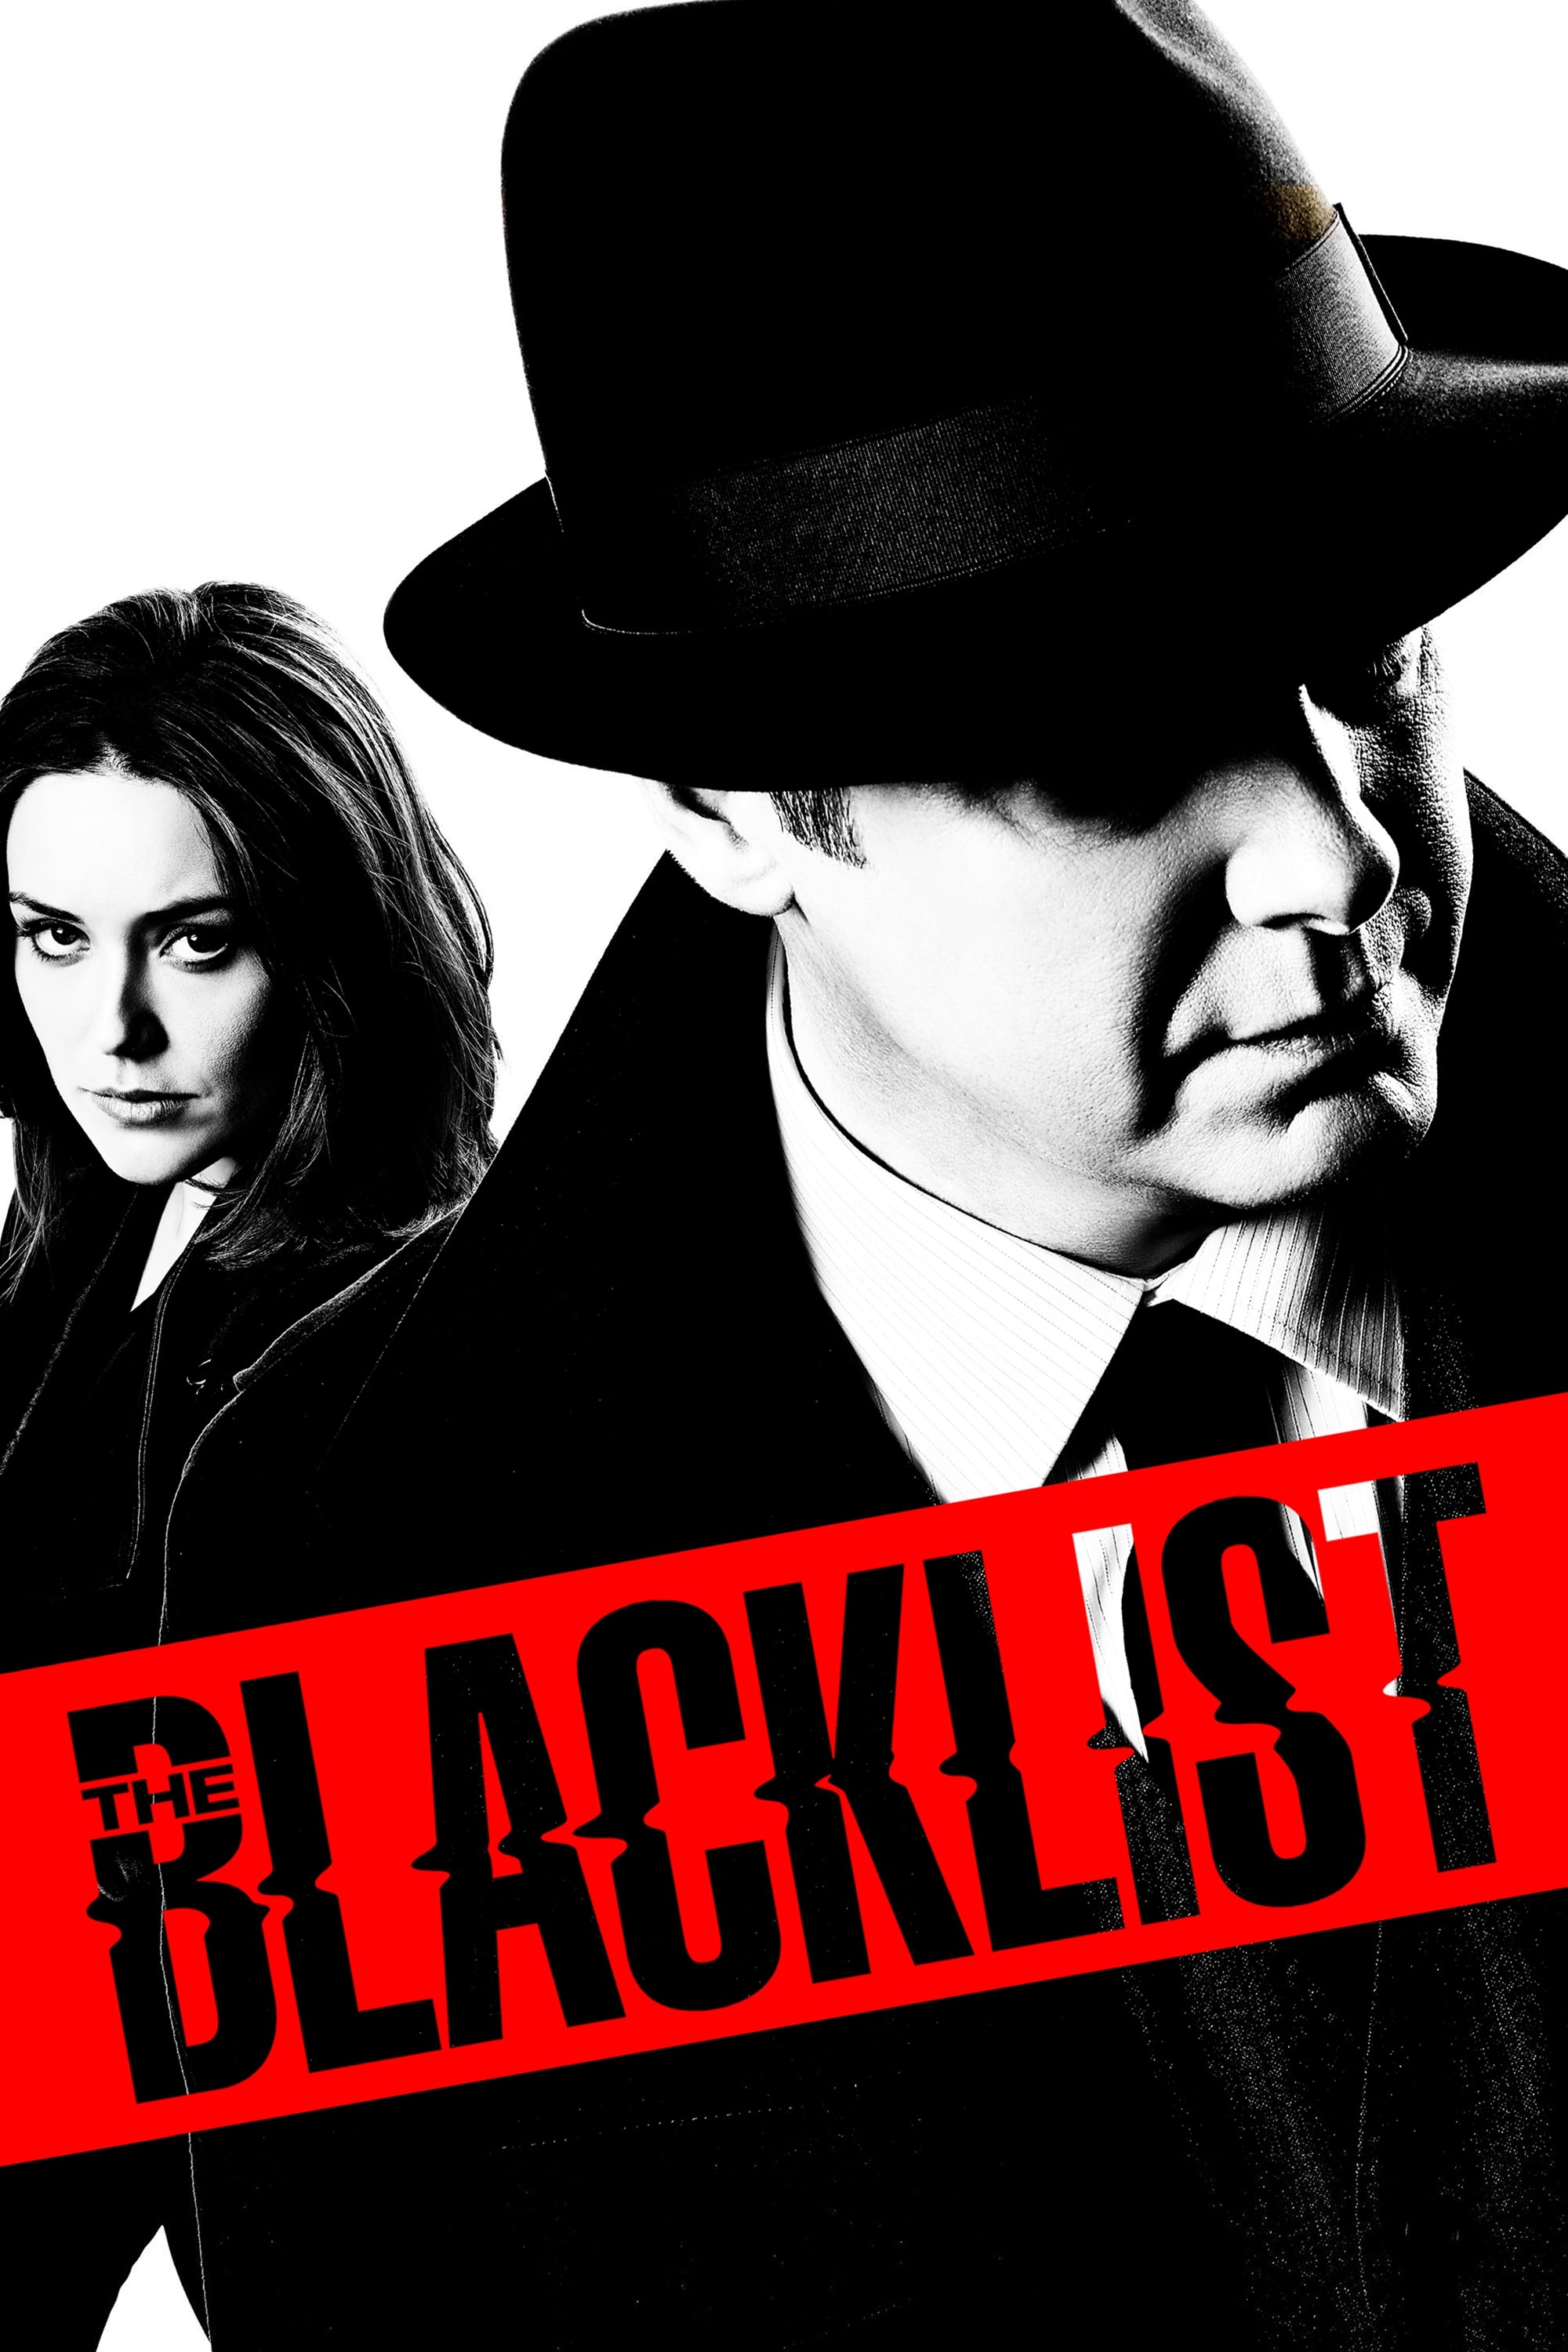 The Blacklist TV Shows About Hidden Identity